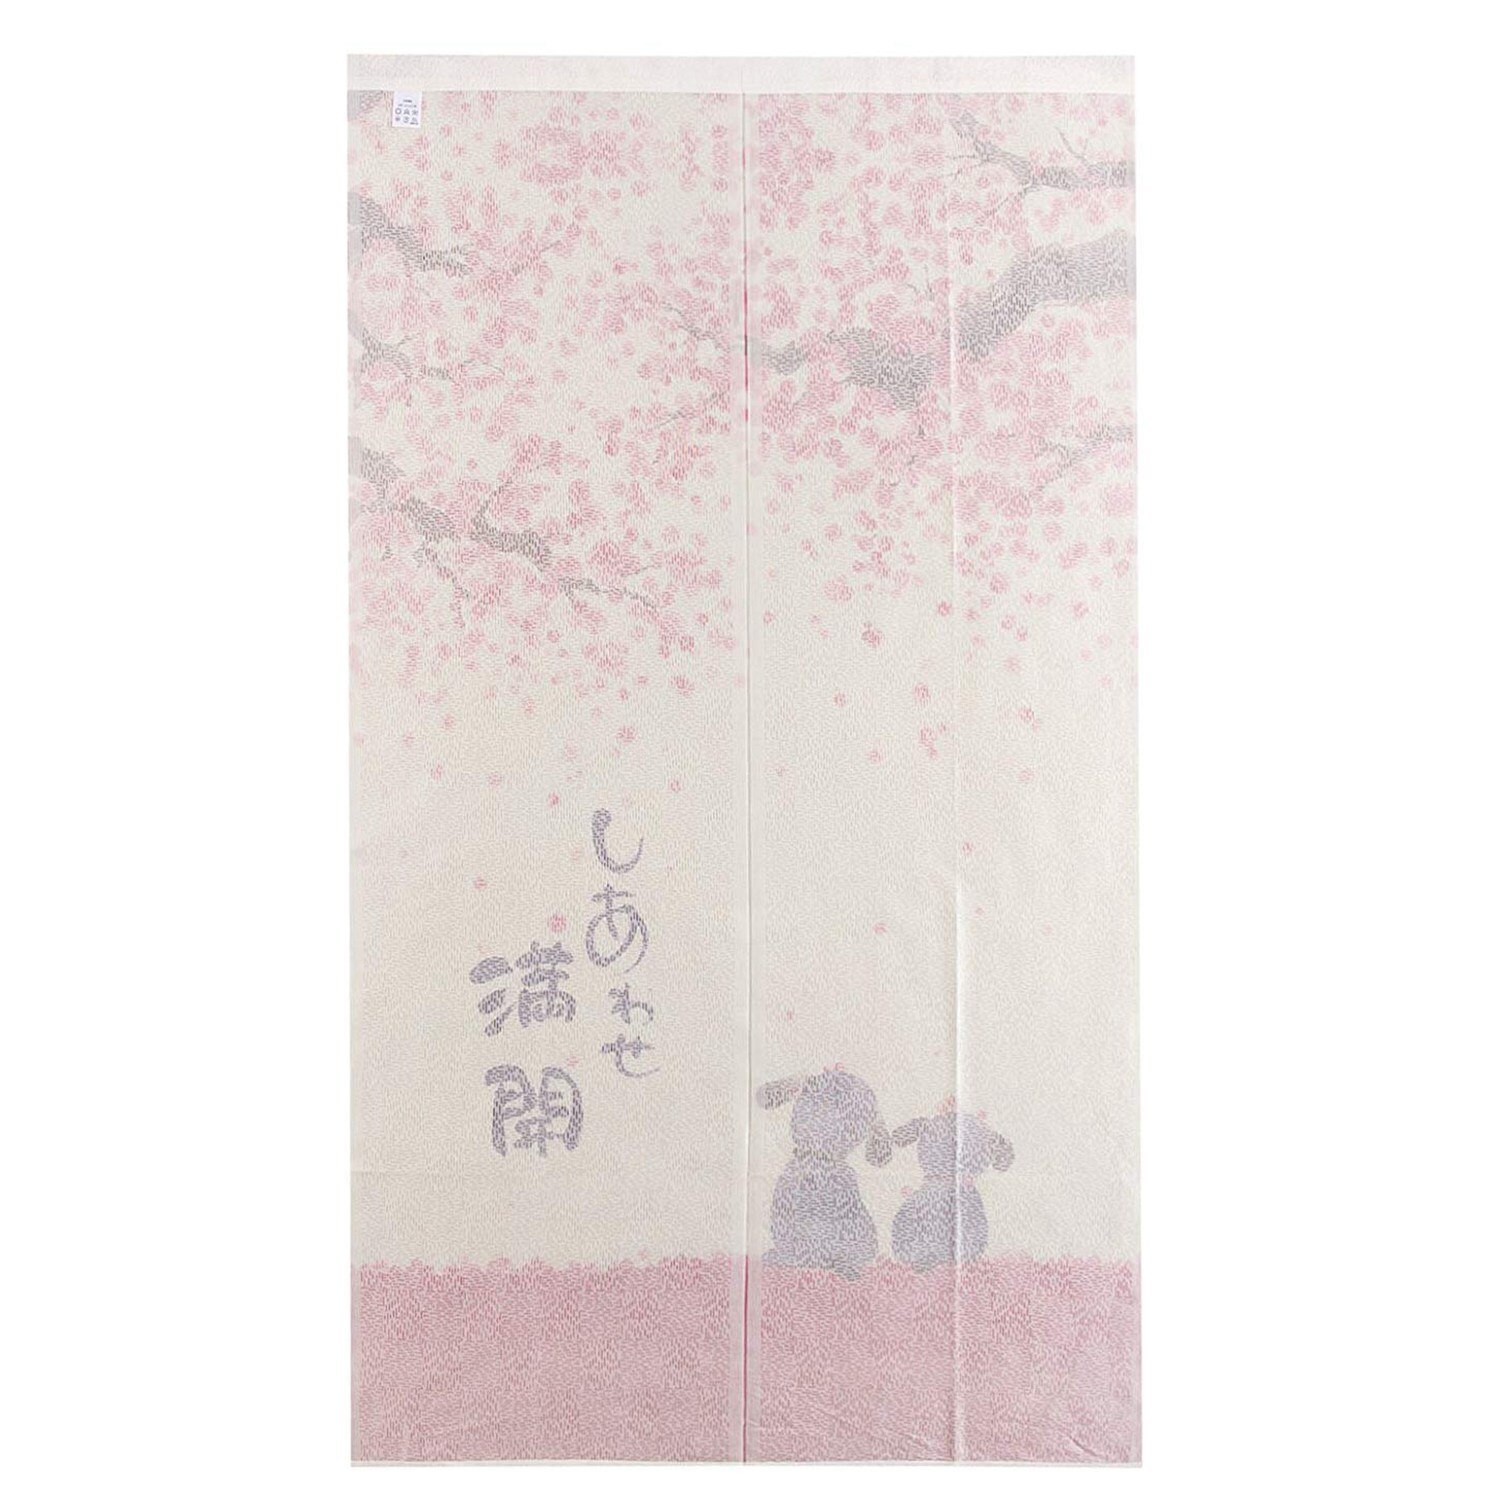 Css japansk stil døråbning gardin 85 x 150cm glade hunde kirsebærblomst